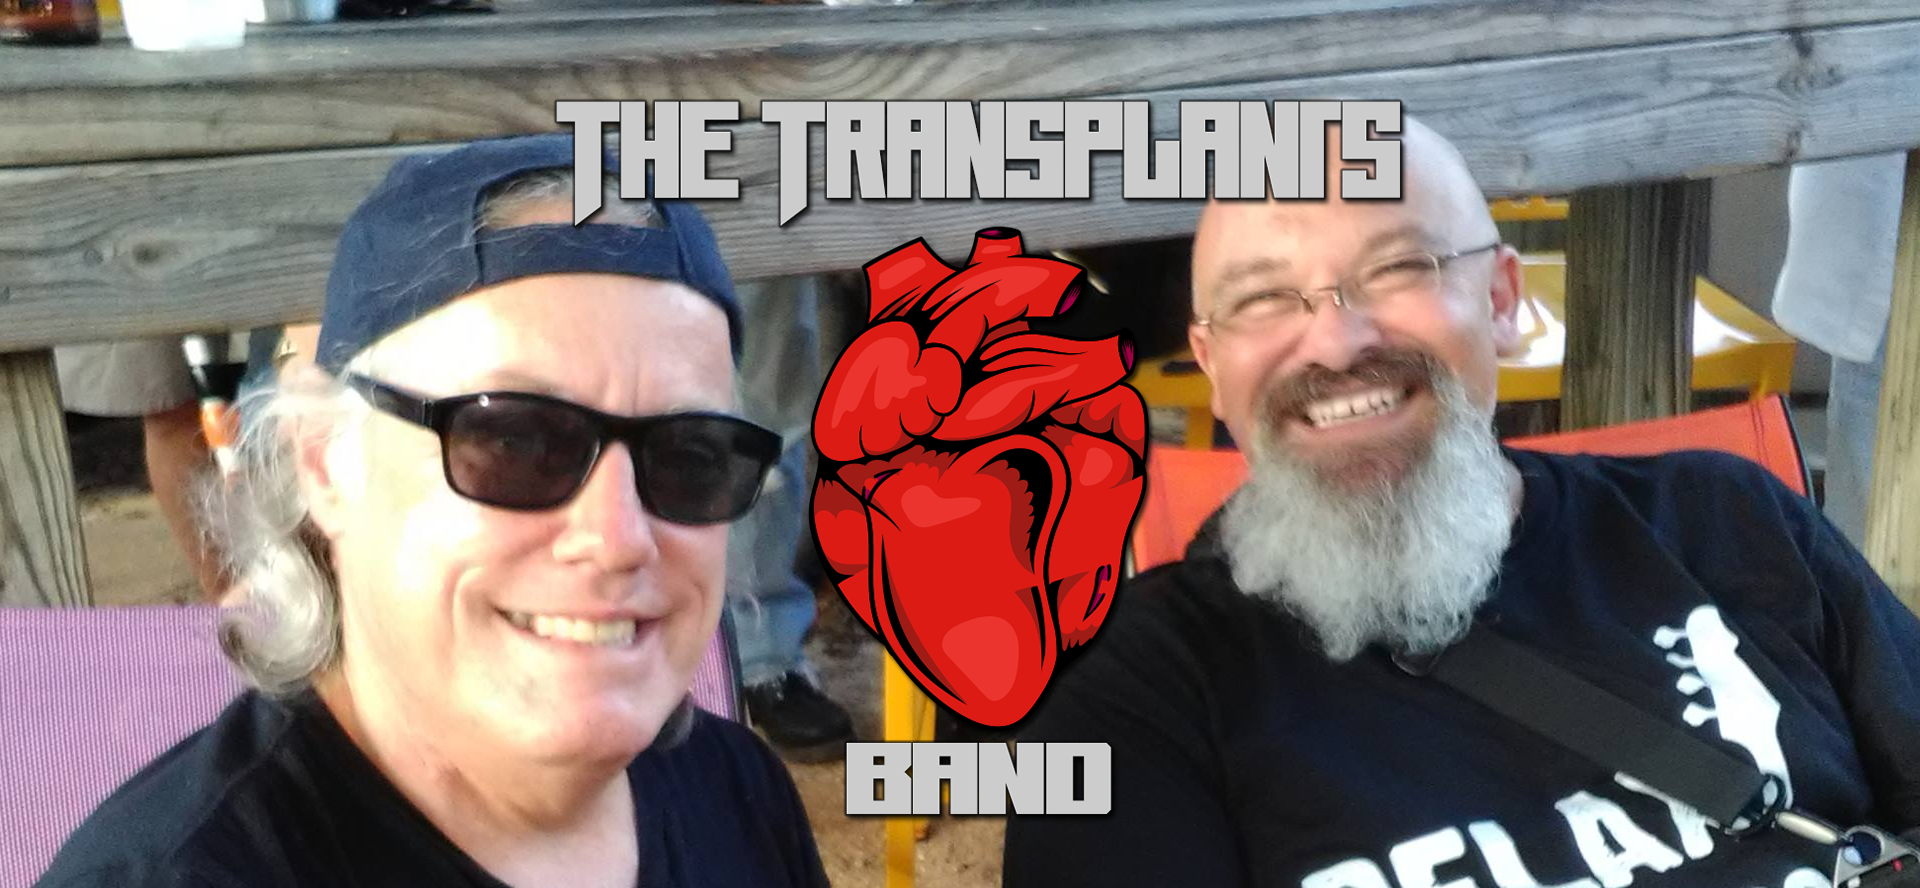 The Transplants Band - Joseph Luley and Brian Tafoya